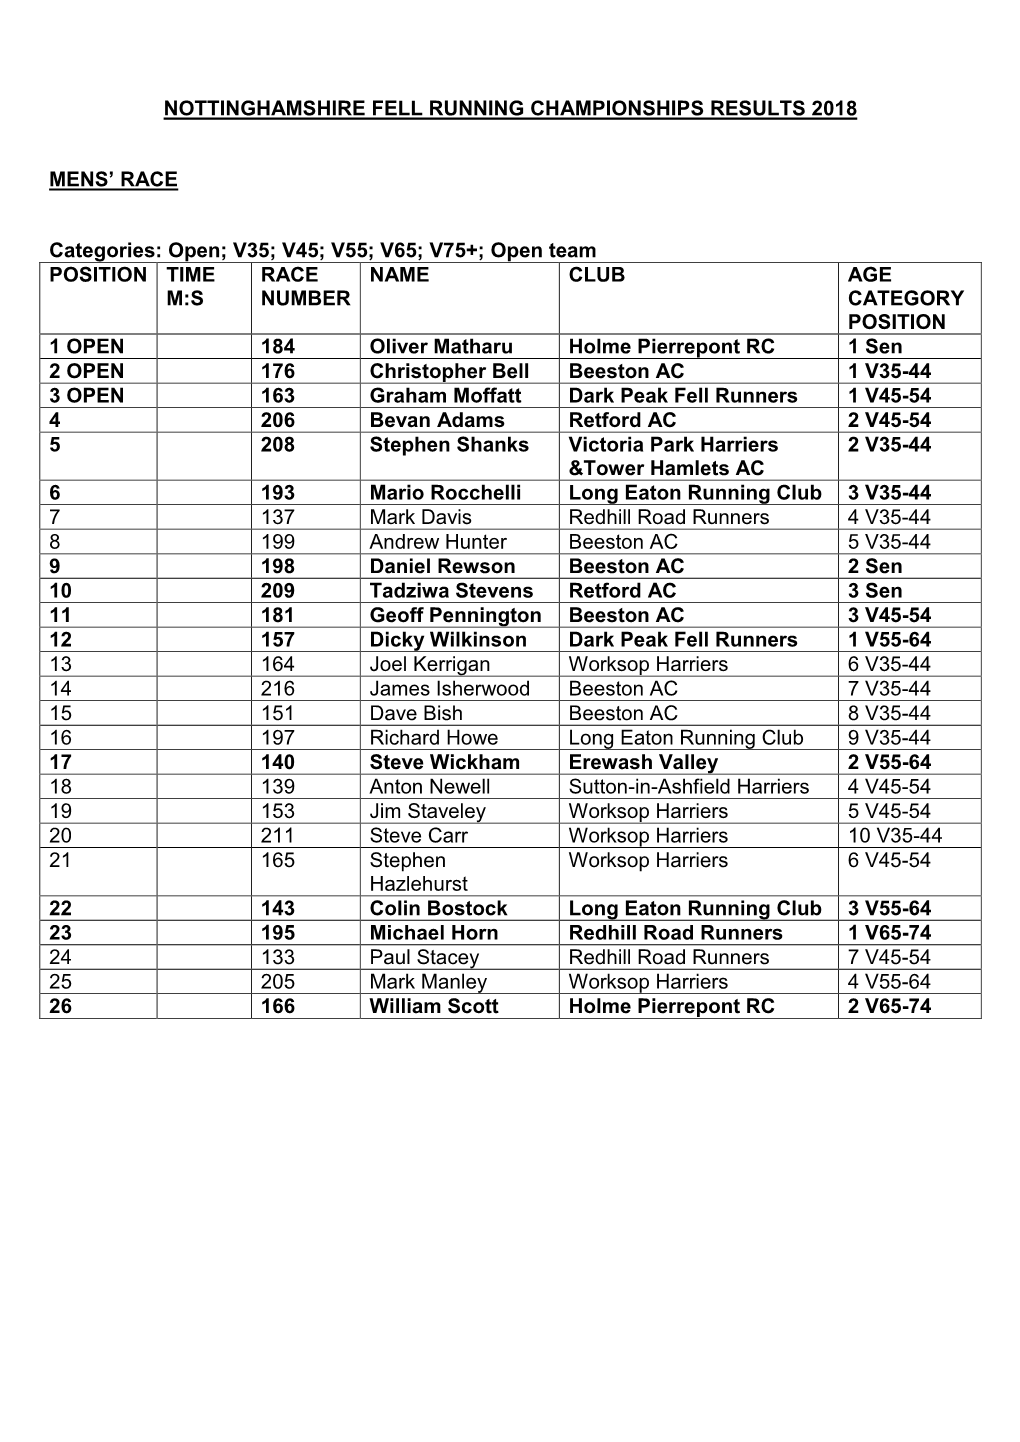 Nottinghamshire Fell Running Championship Results 2011